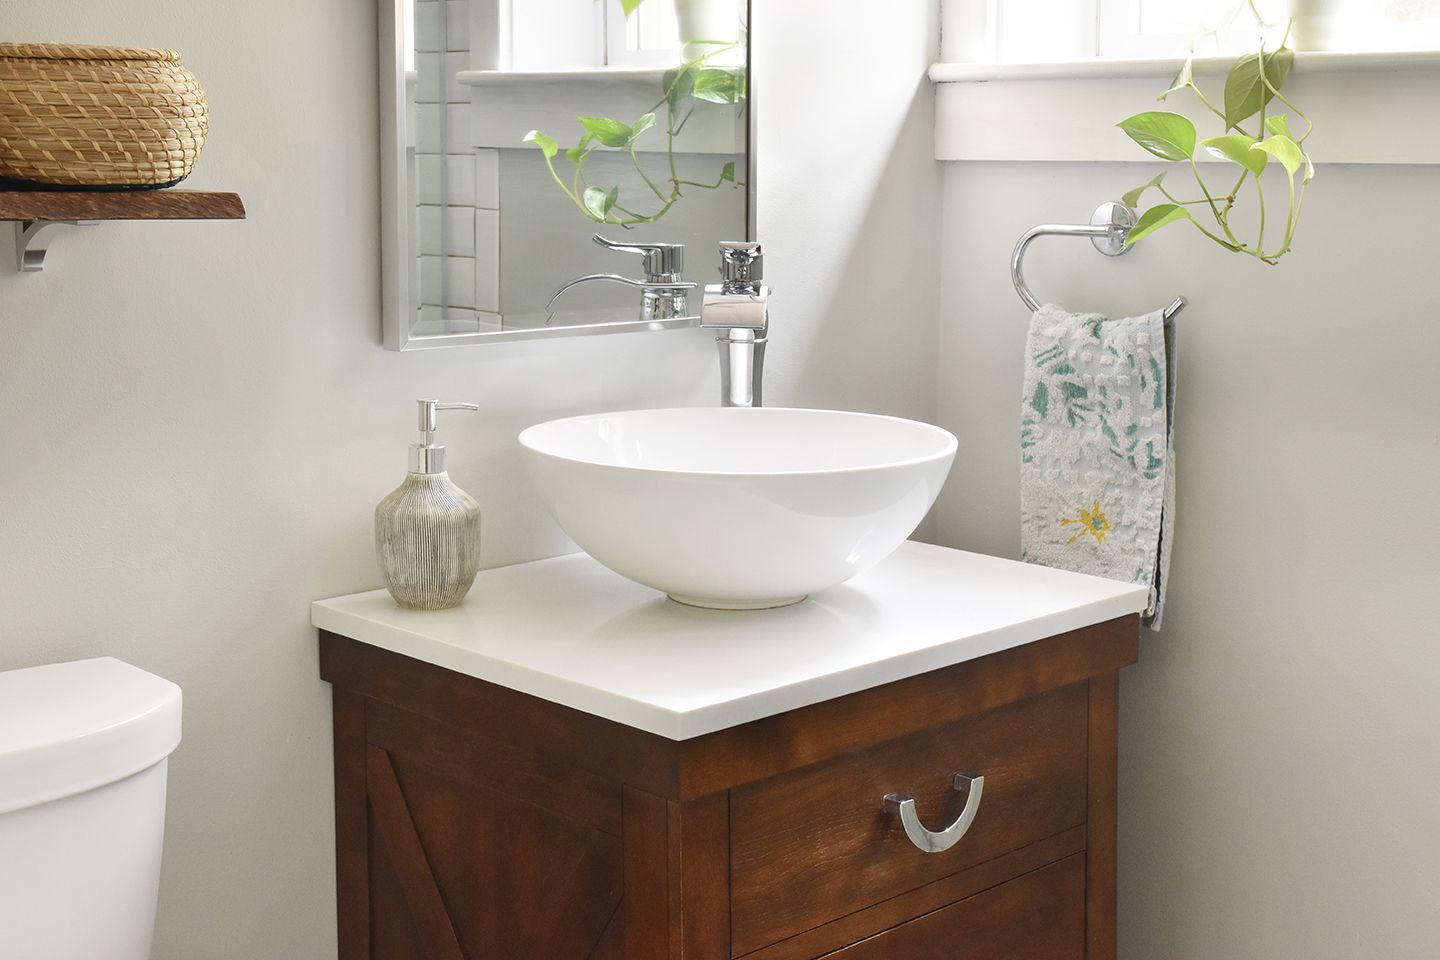 Key Factors to Consider in choosing a Wash Bowl for Bathroom